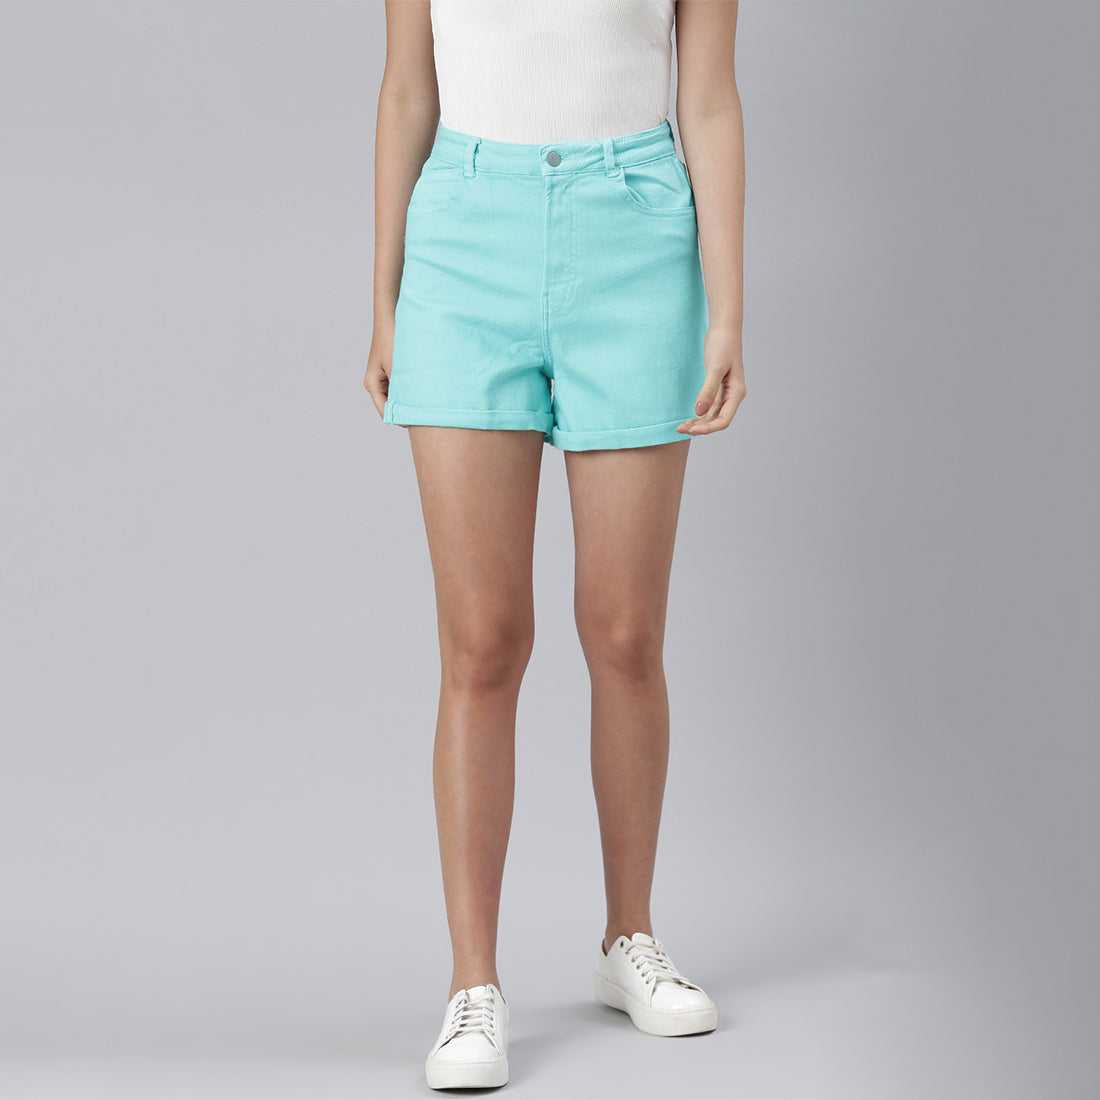 Turquoise  High Waist Shorts